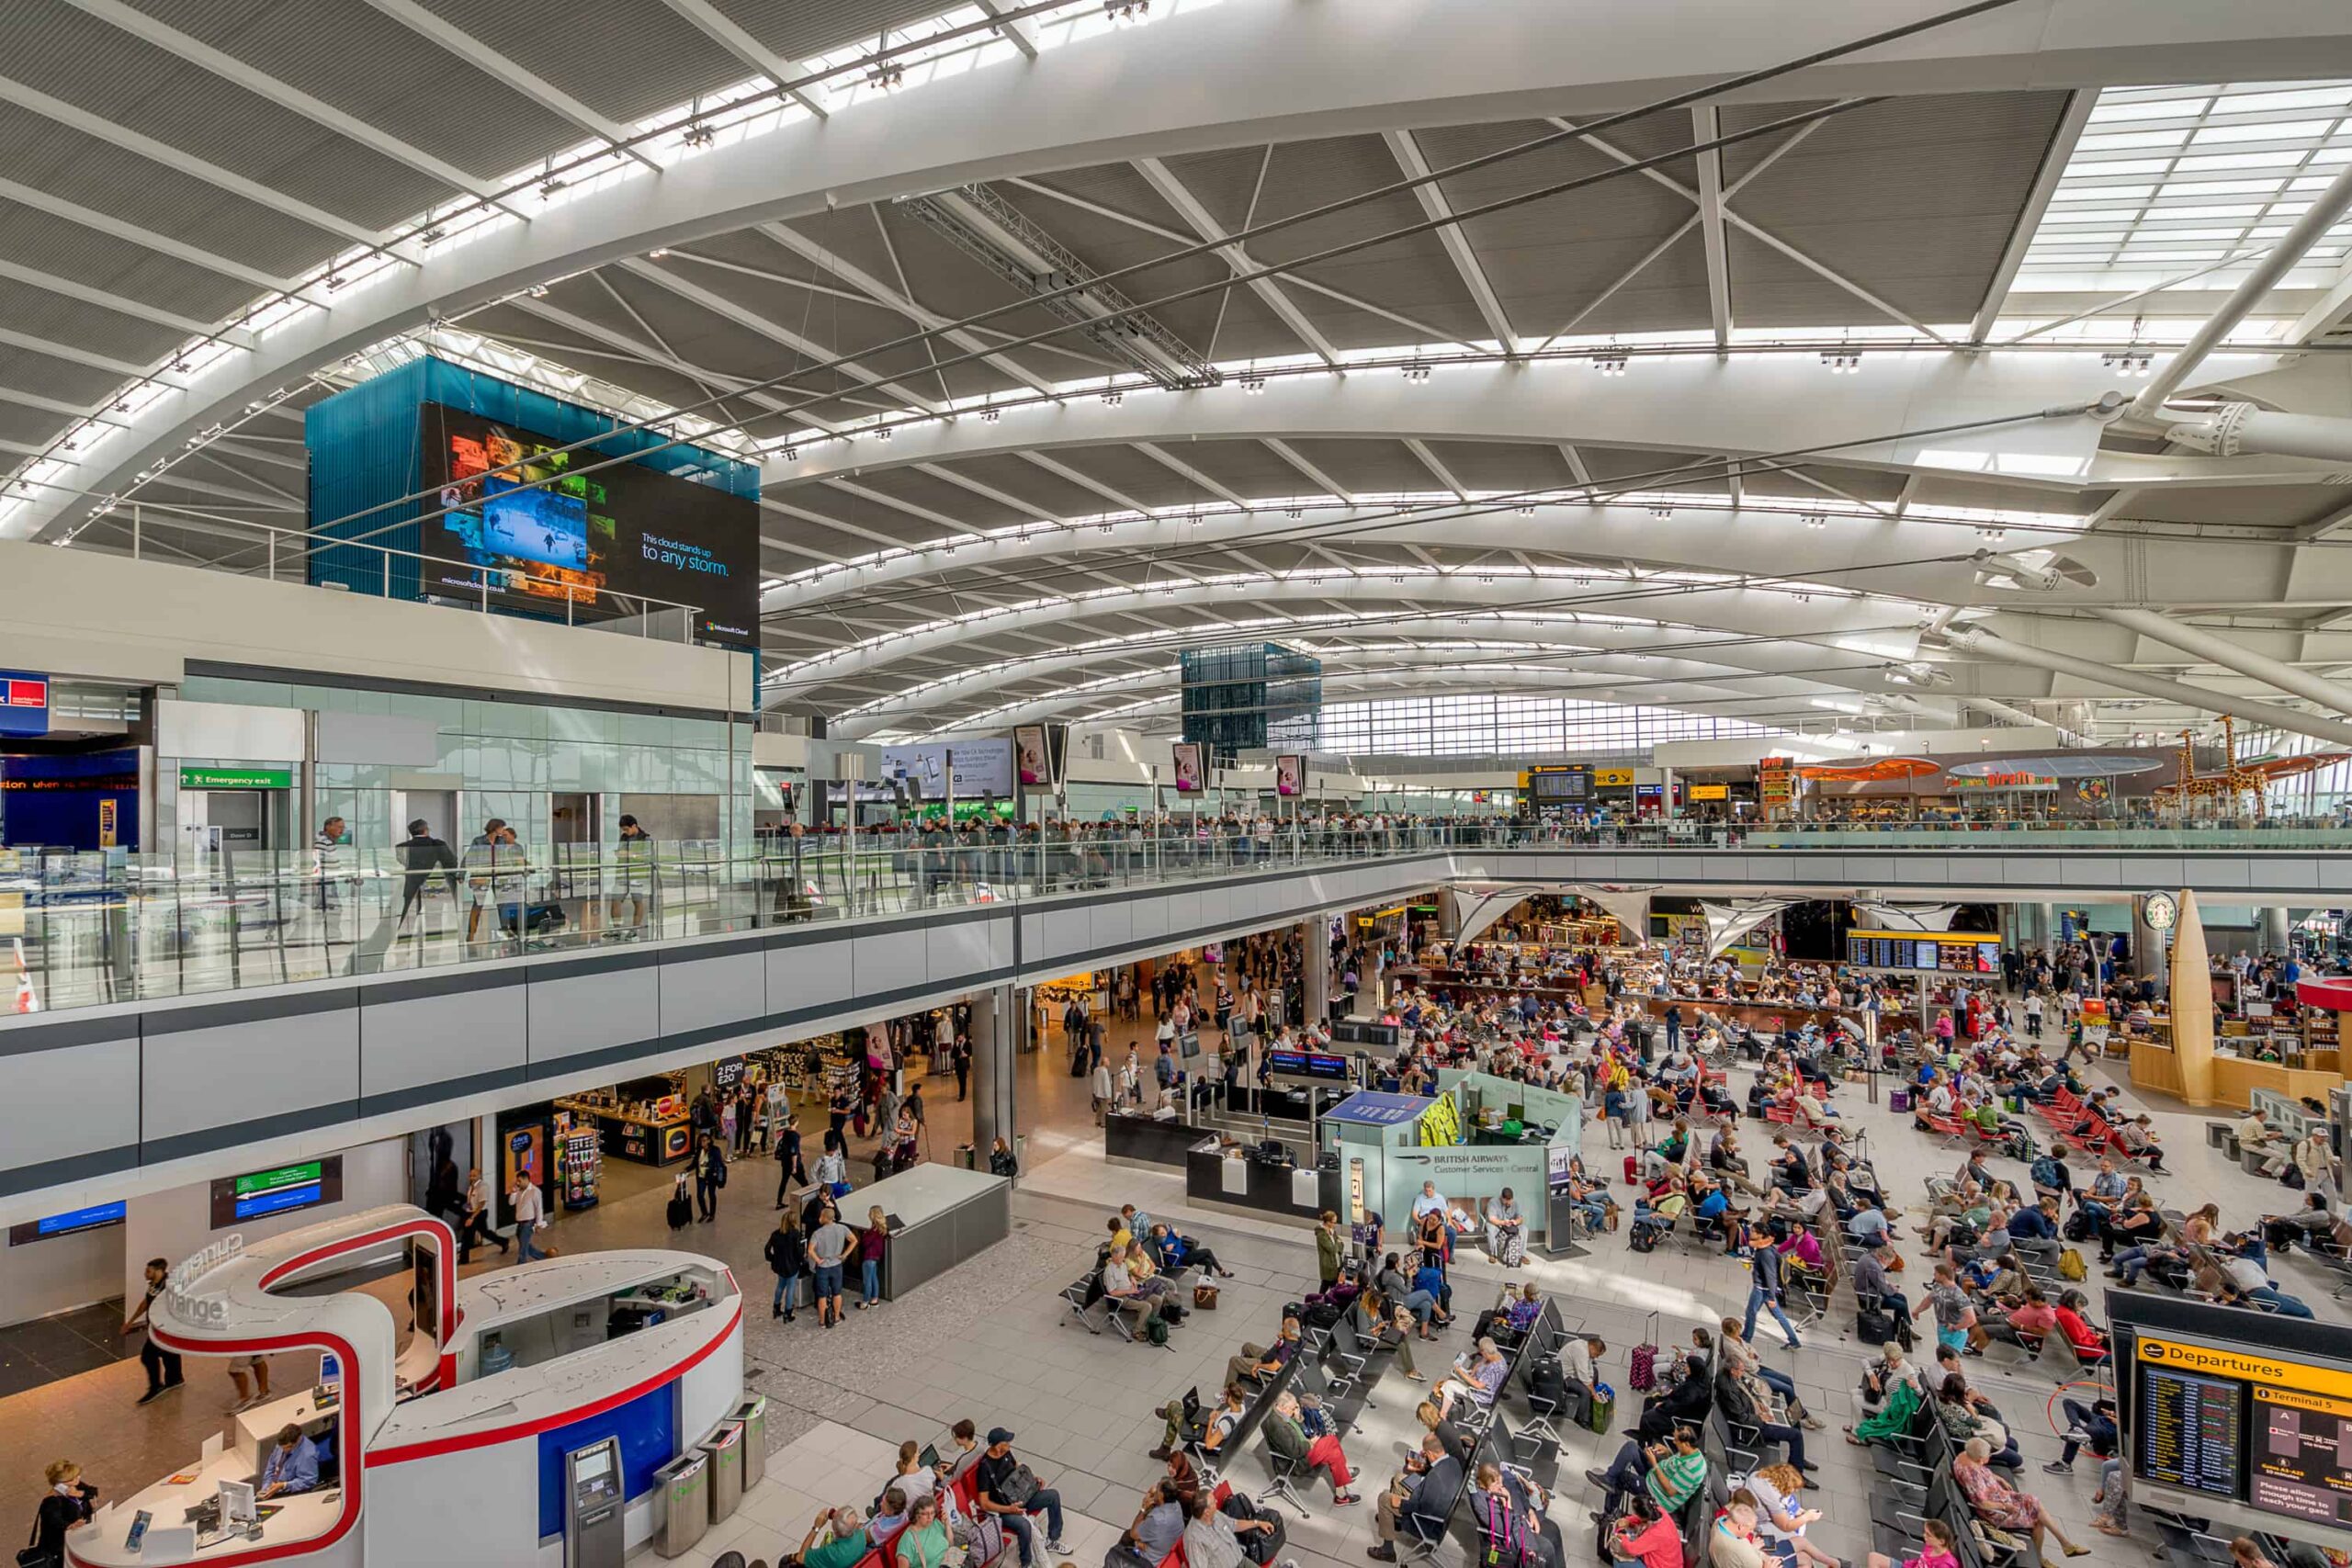 Terminal Facilities at Heathrow Airport